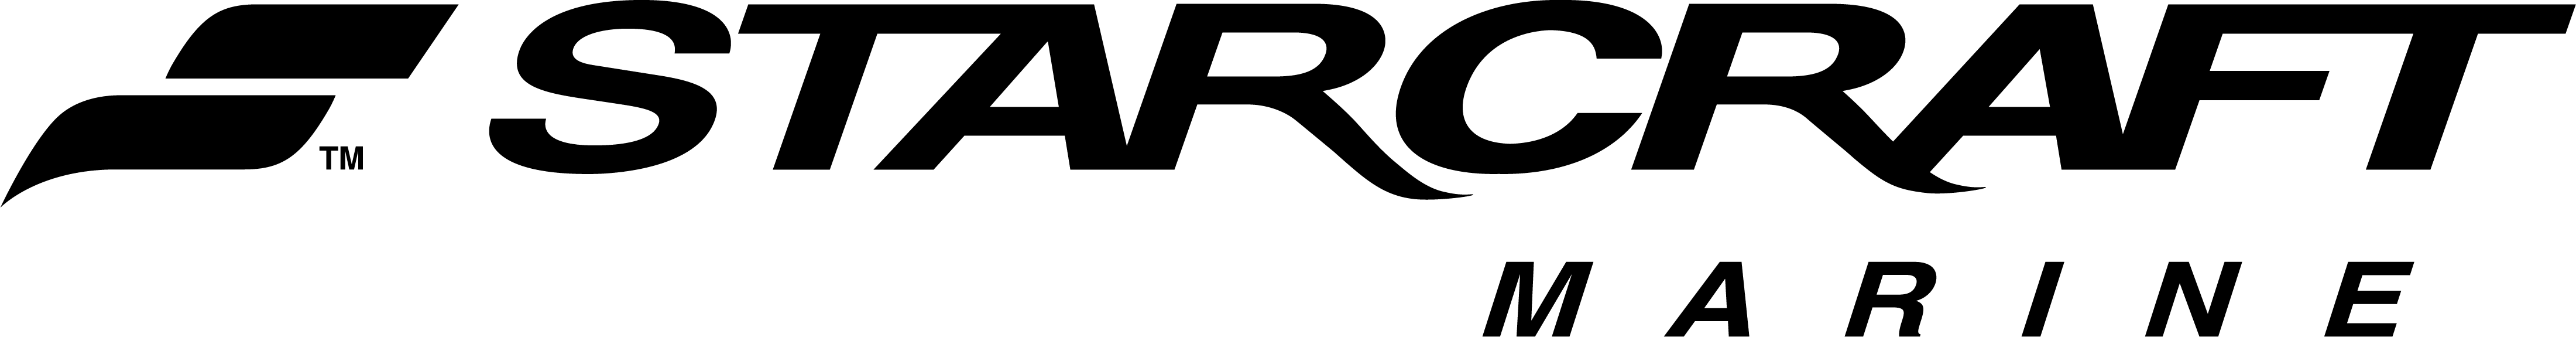 Starcraft brand logo